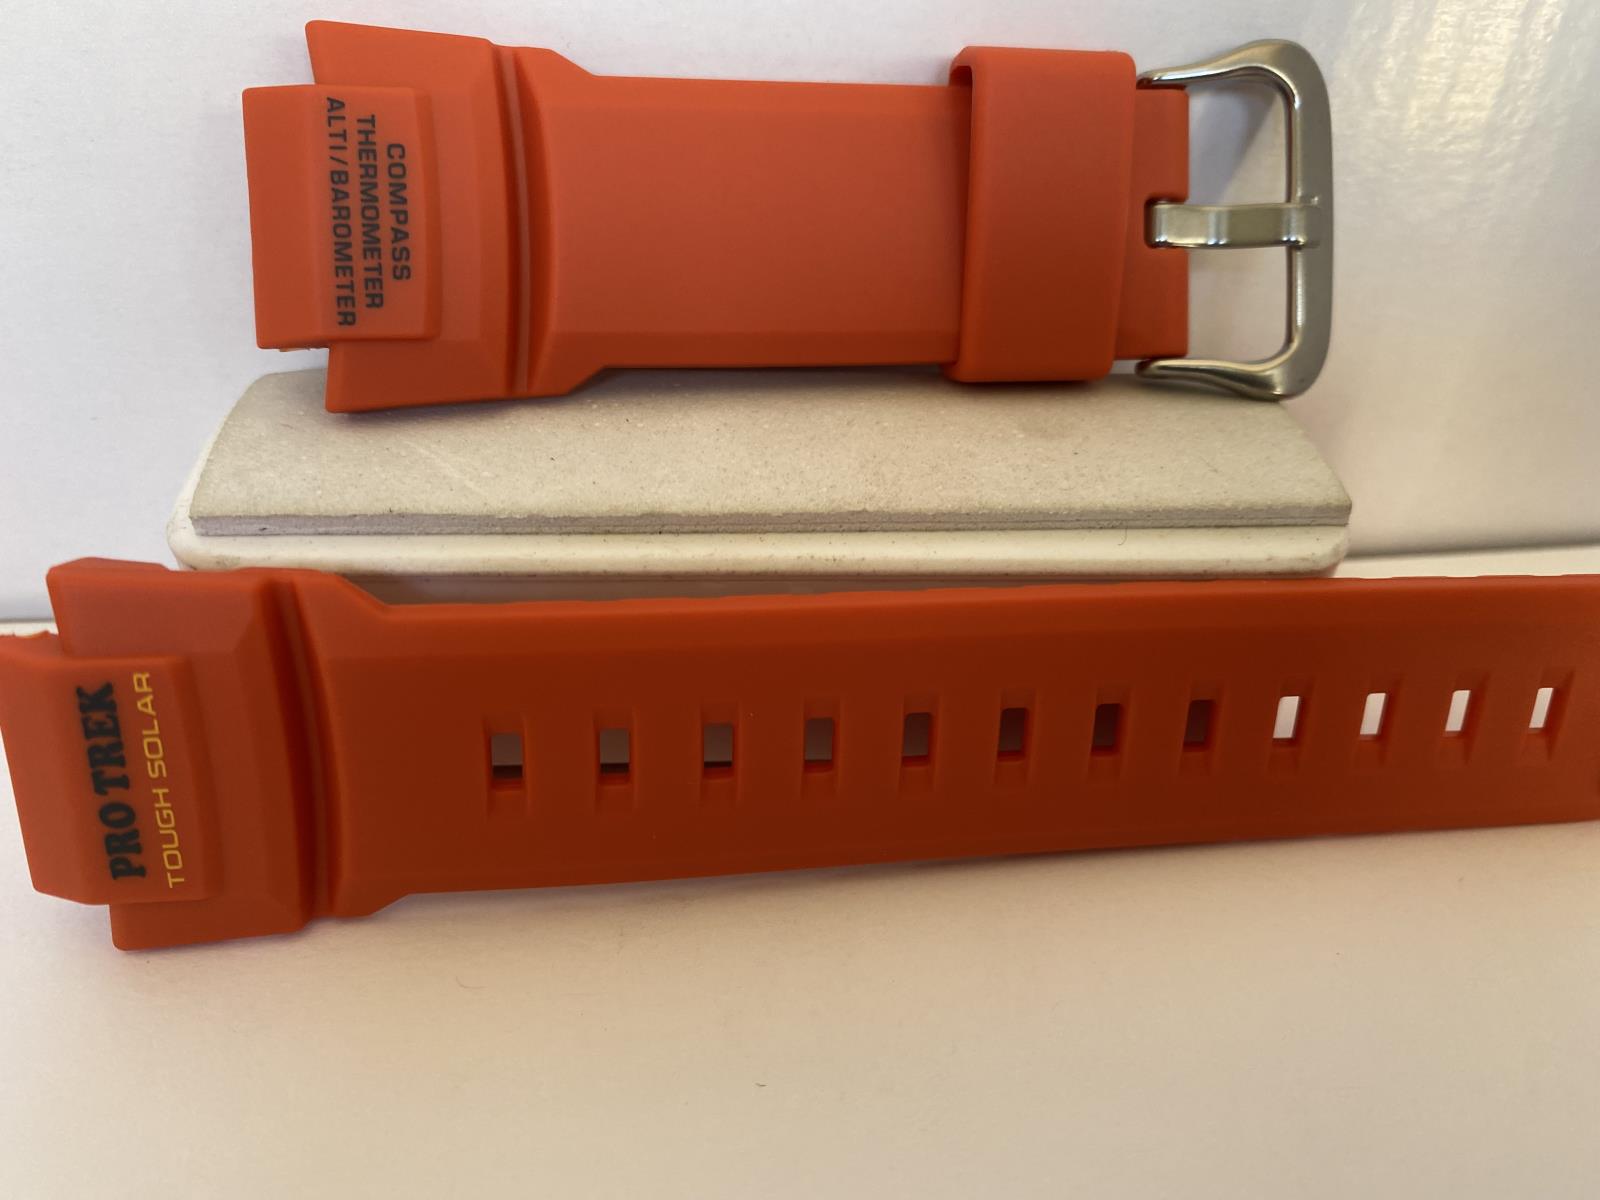 Casio Watchband PRG-270 -4A Orange Original Pro Trek Tough Solar Casio Strap